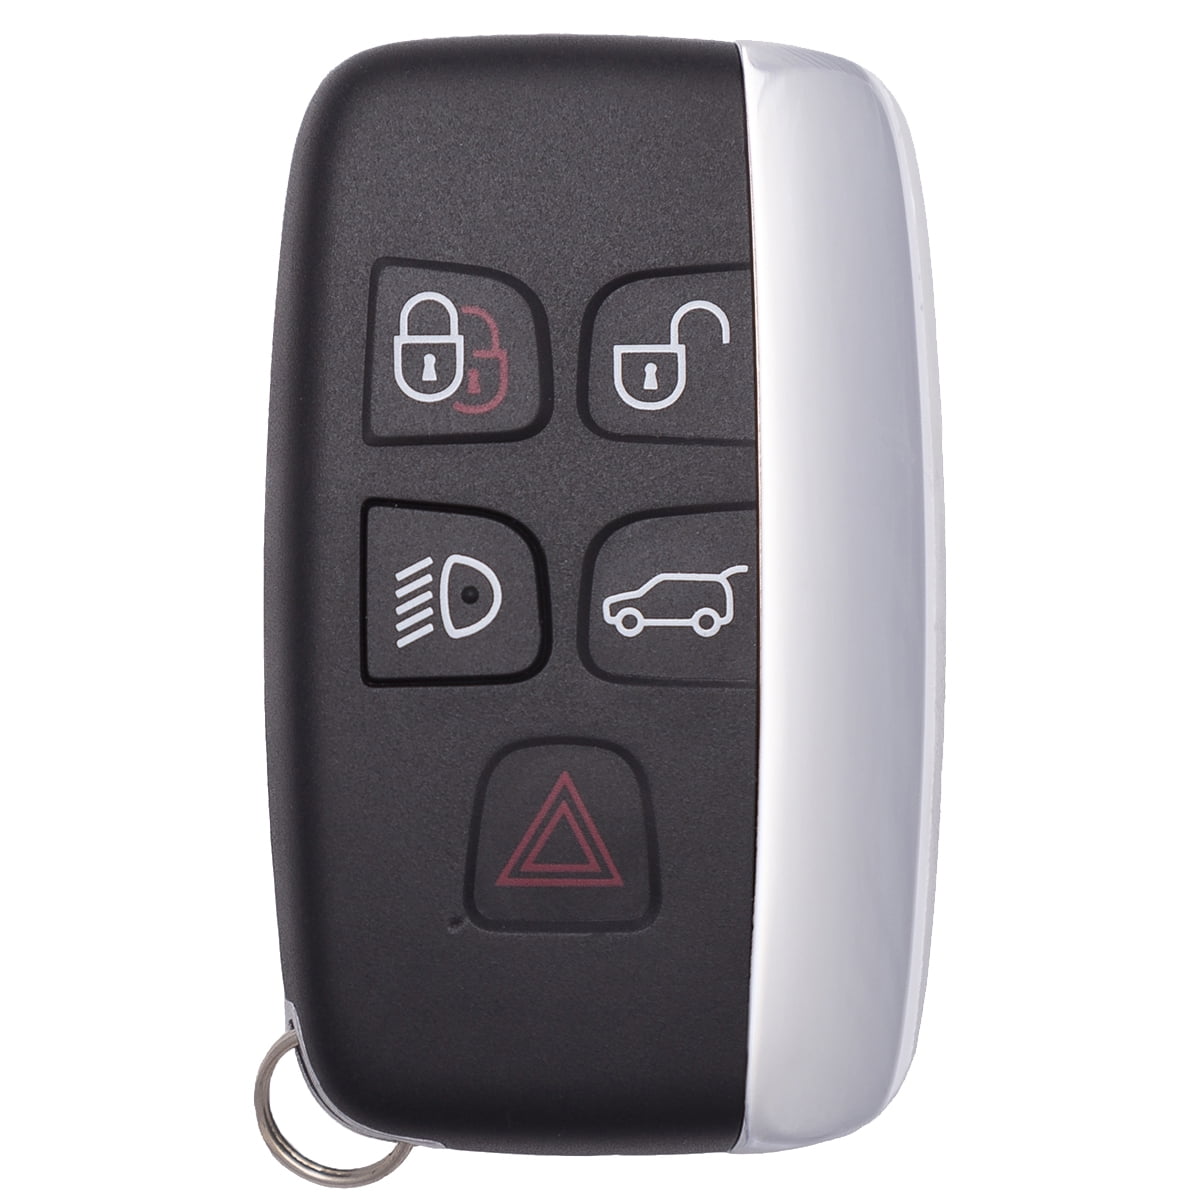 Upgraded Smart Remote Car Key Shell Fob for Jaguar XF XJ XK XE F-Type KOBJTF10A 